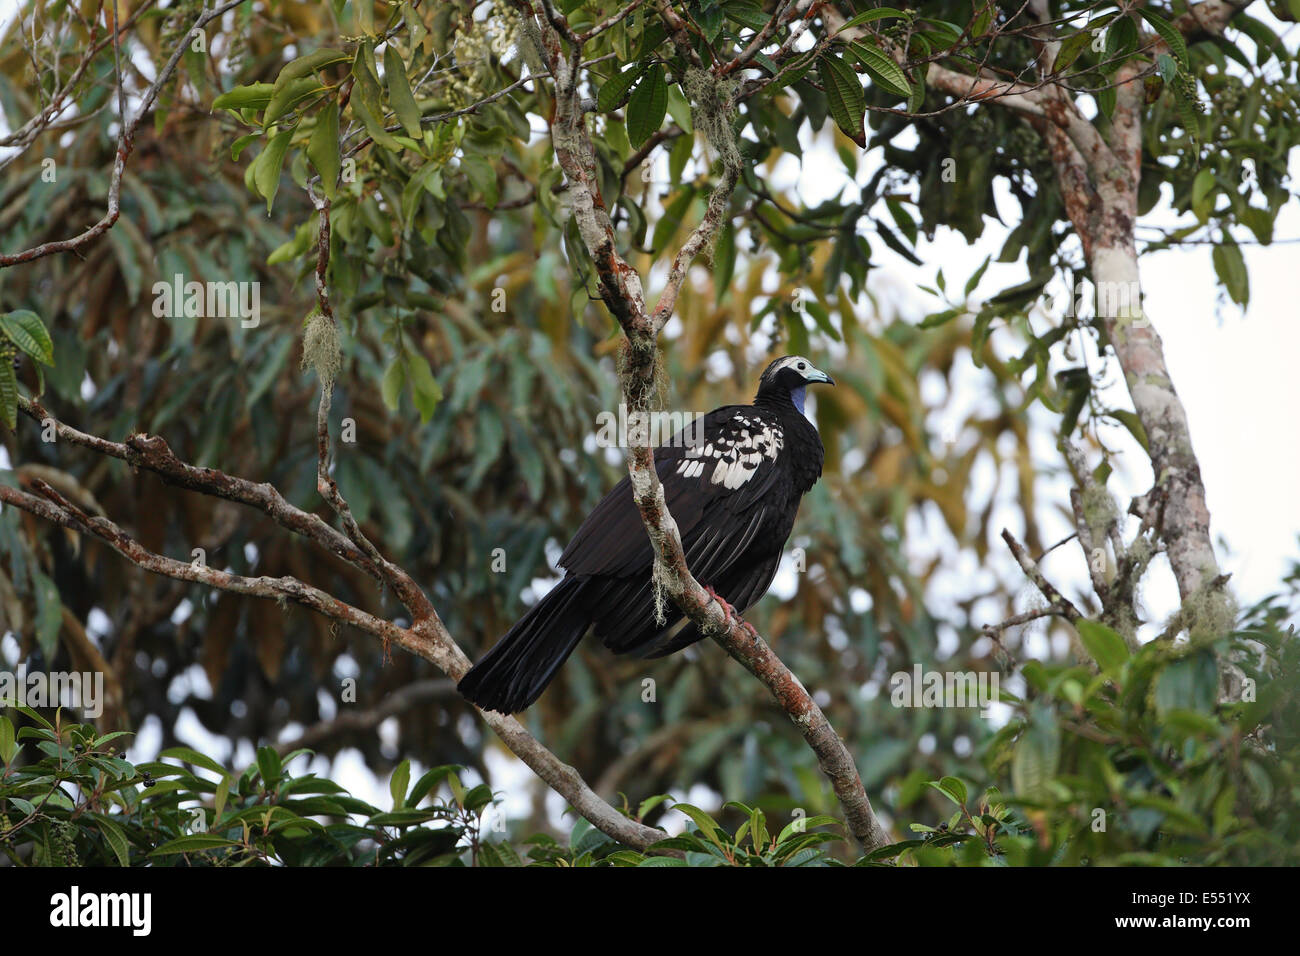 Trinidad Piping-guan (Pipile pipile) adult, perched on branch, Trinidad, Trinidad and Tobago, April Stock Photo